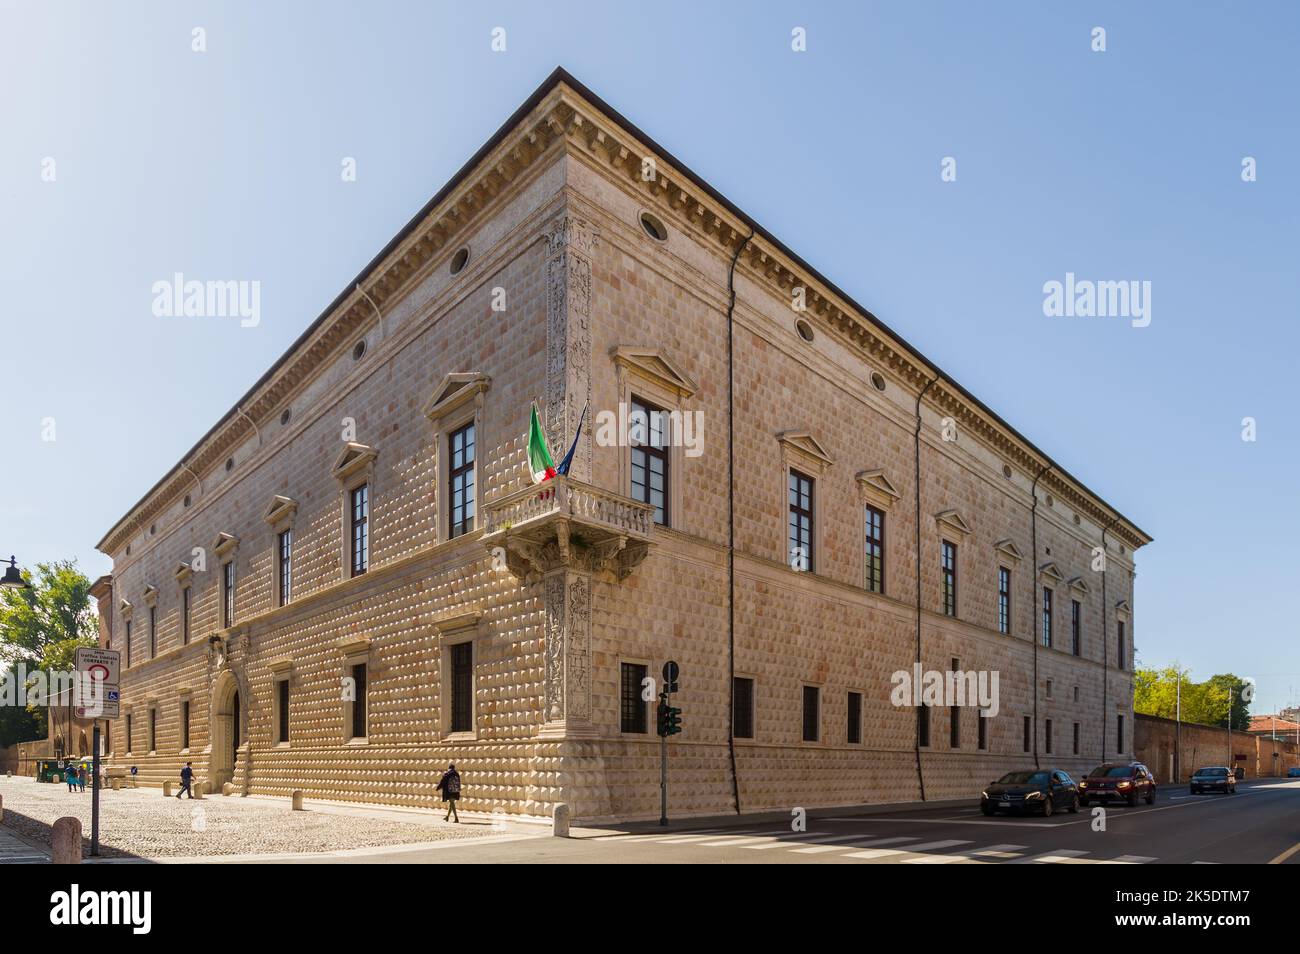 Palacio de diamantes fotografías e imágenes de alta resolución - Alamy